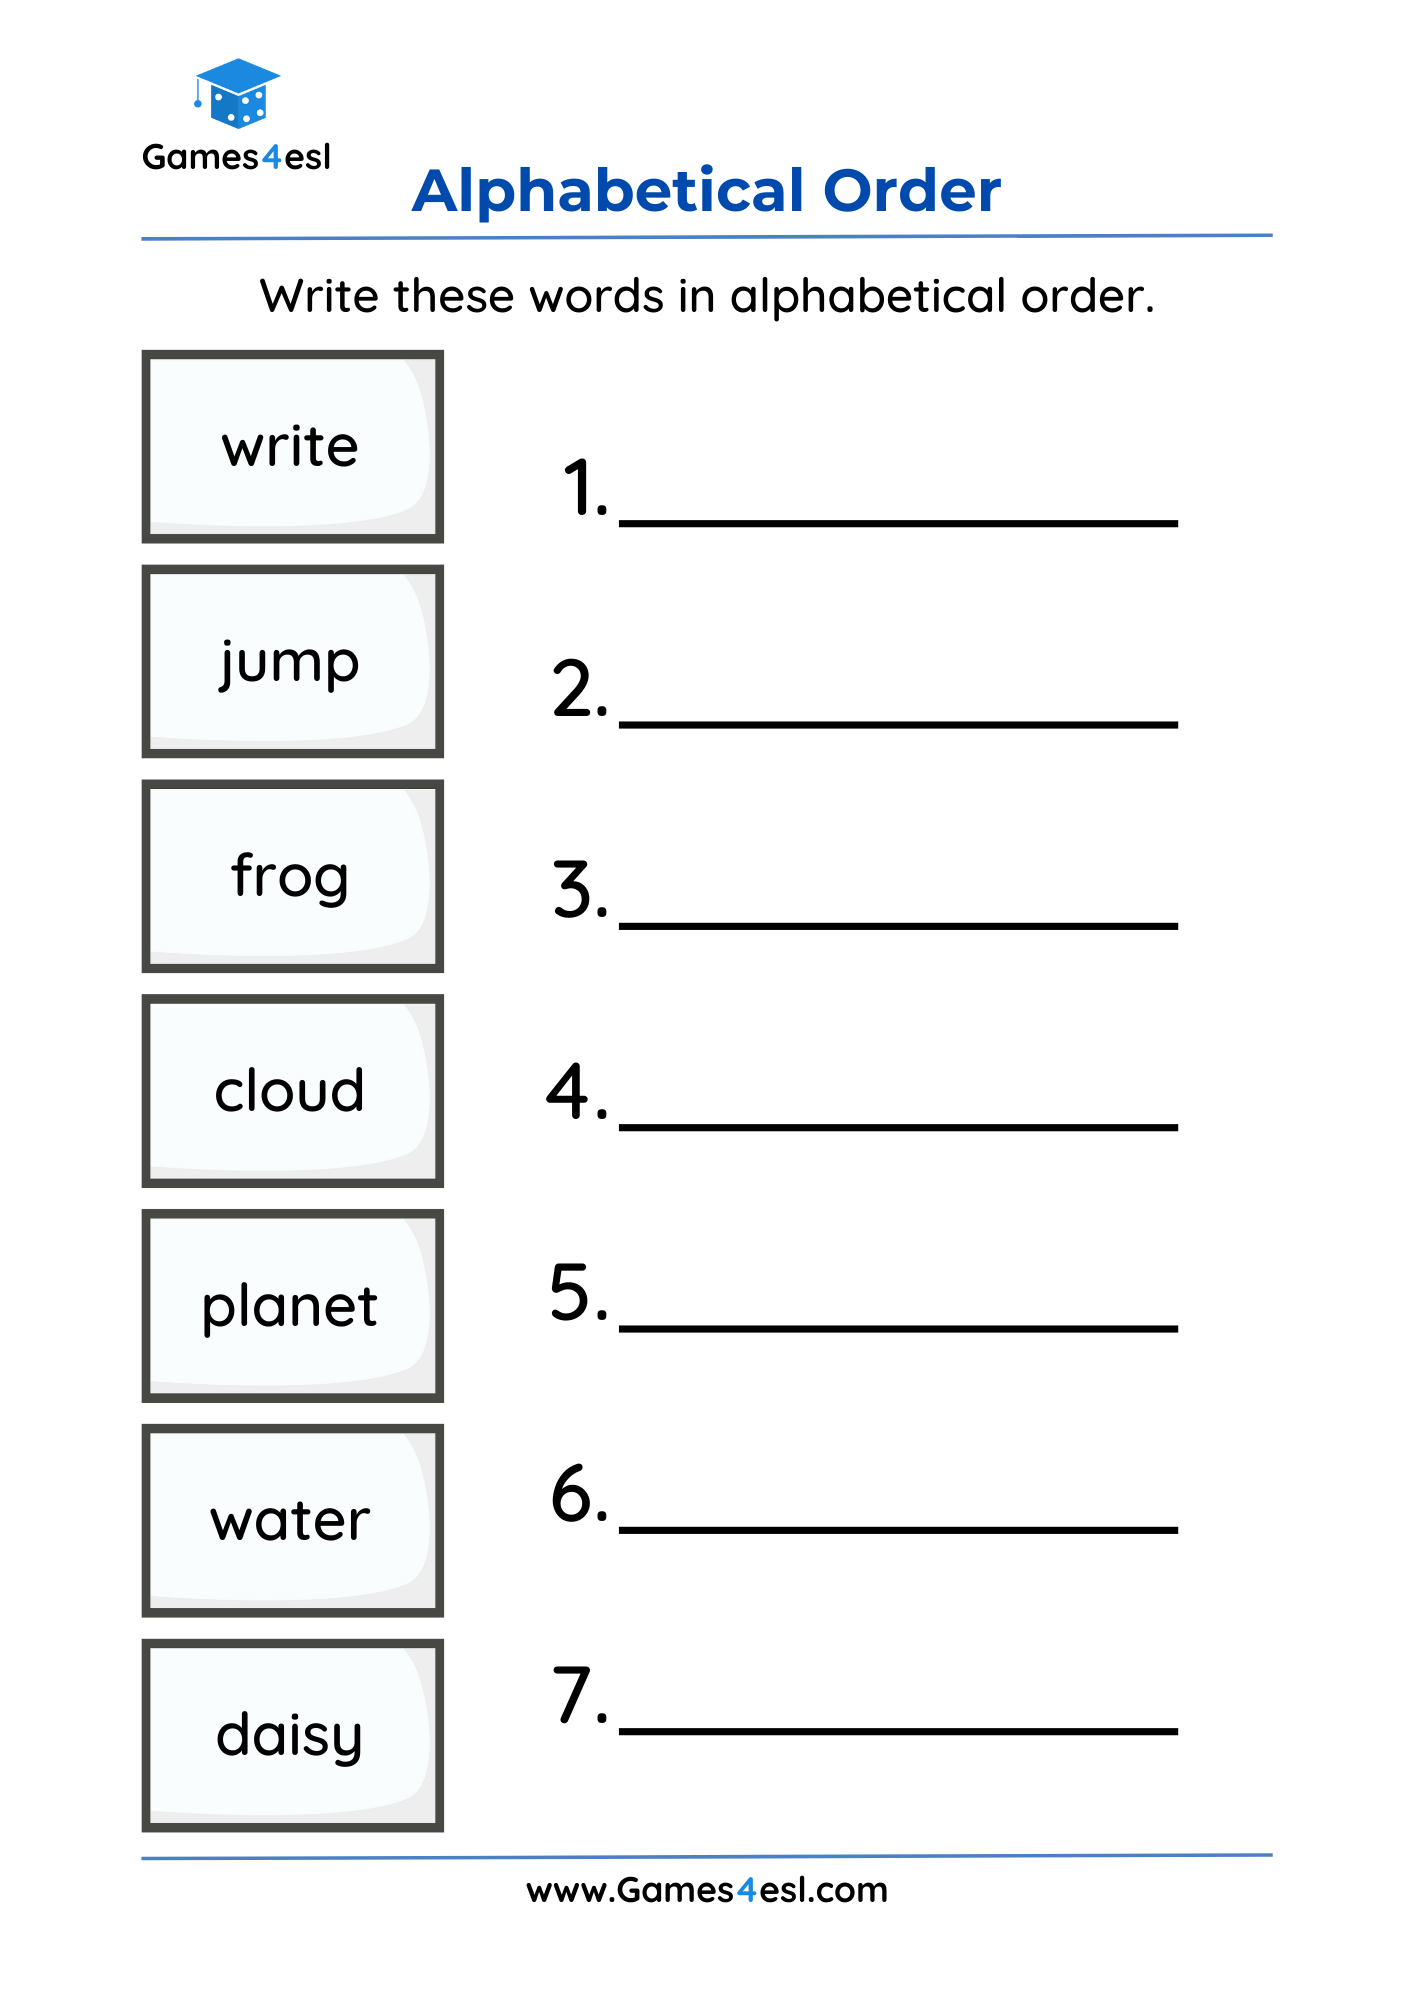 An alphabetical order worksheet for grade 1